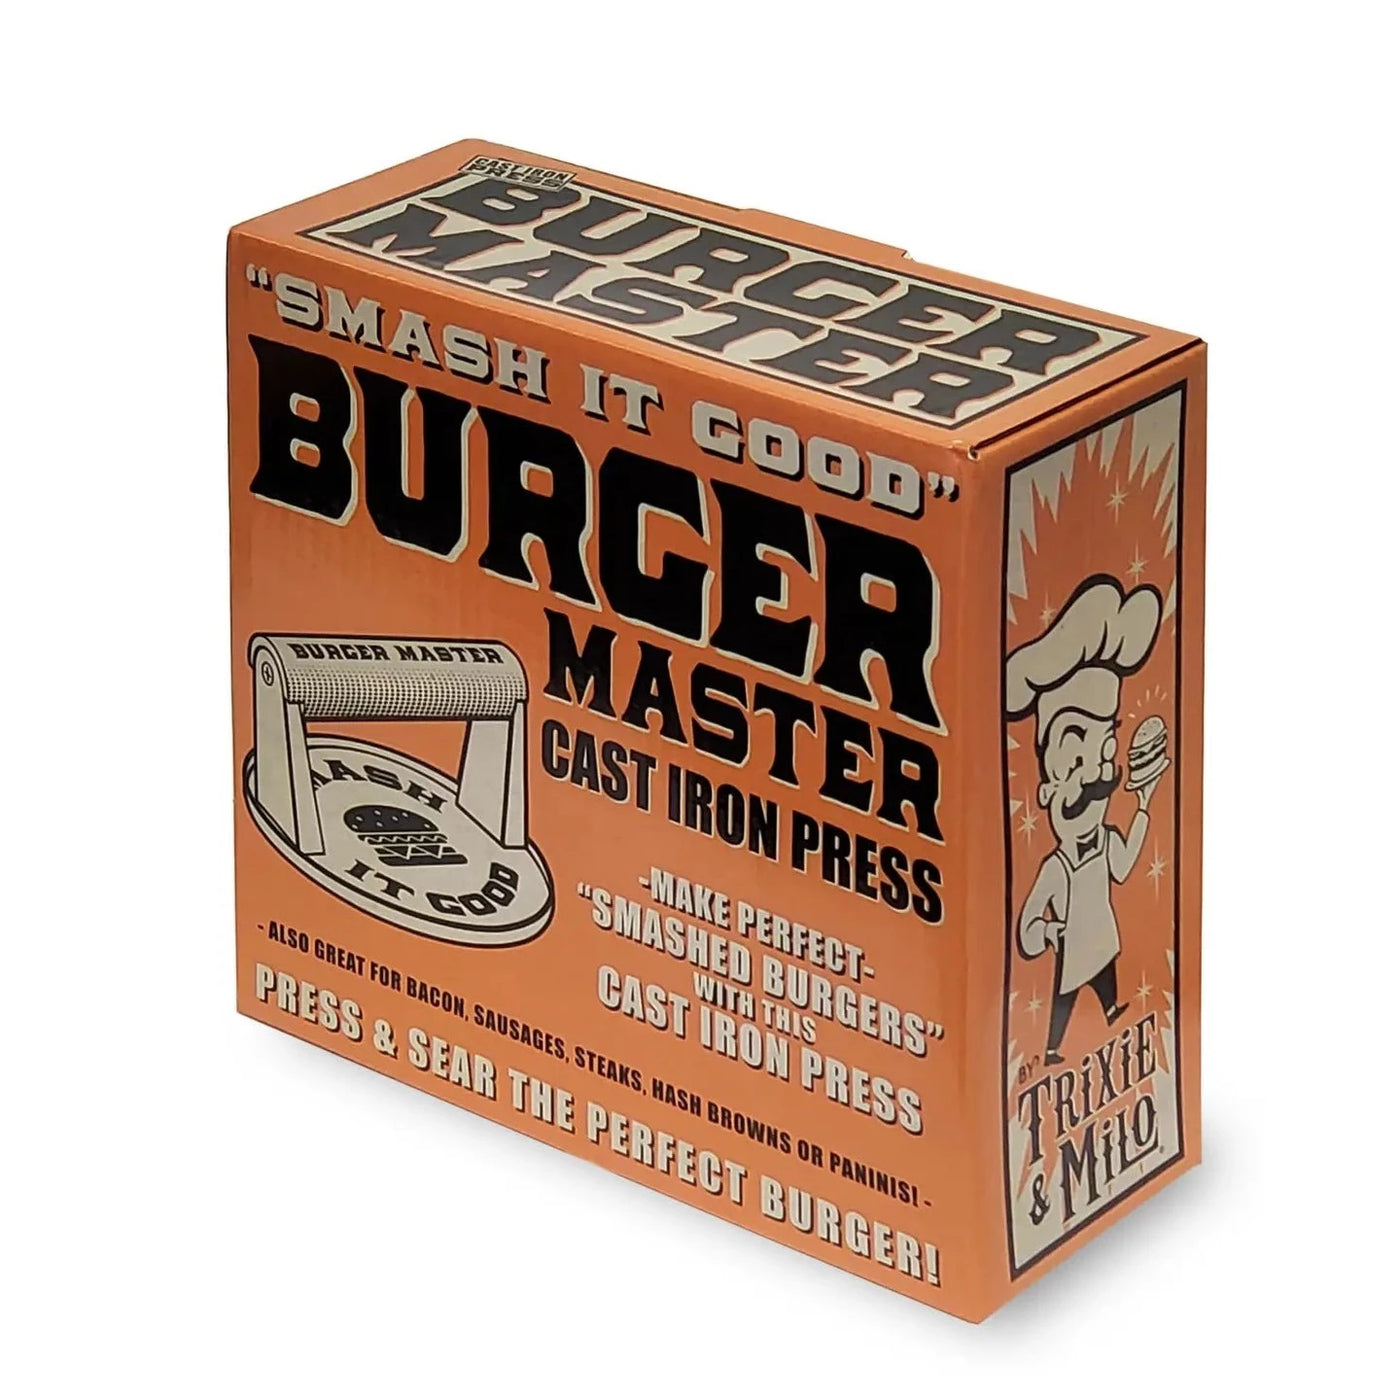 burger master